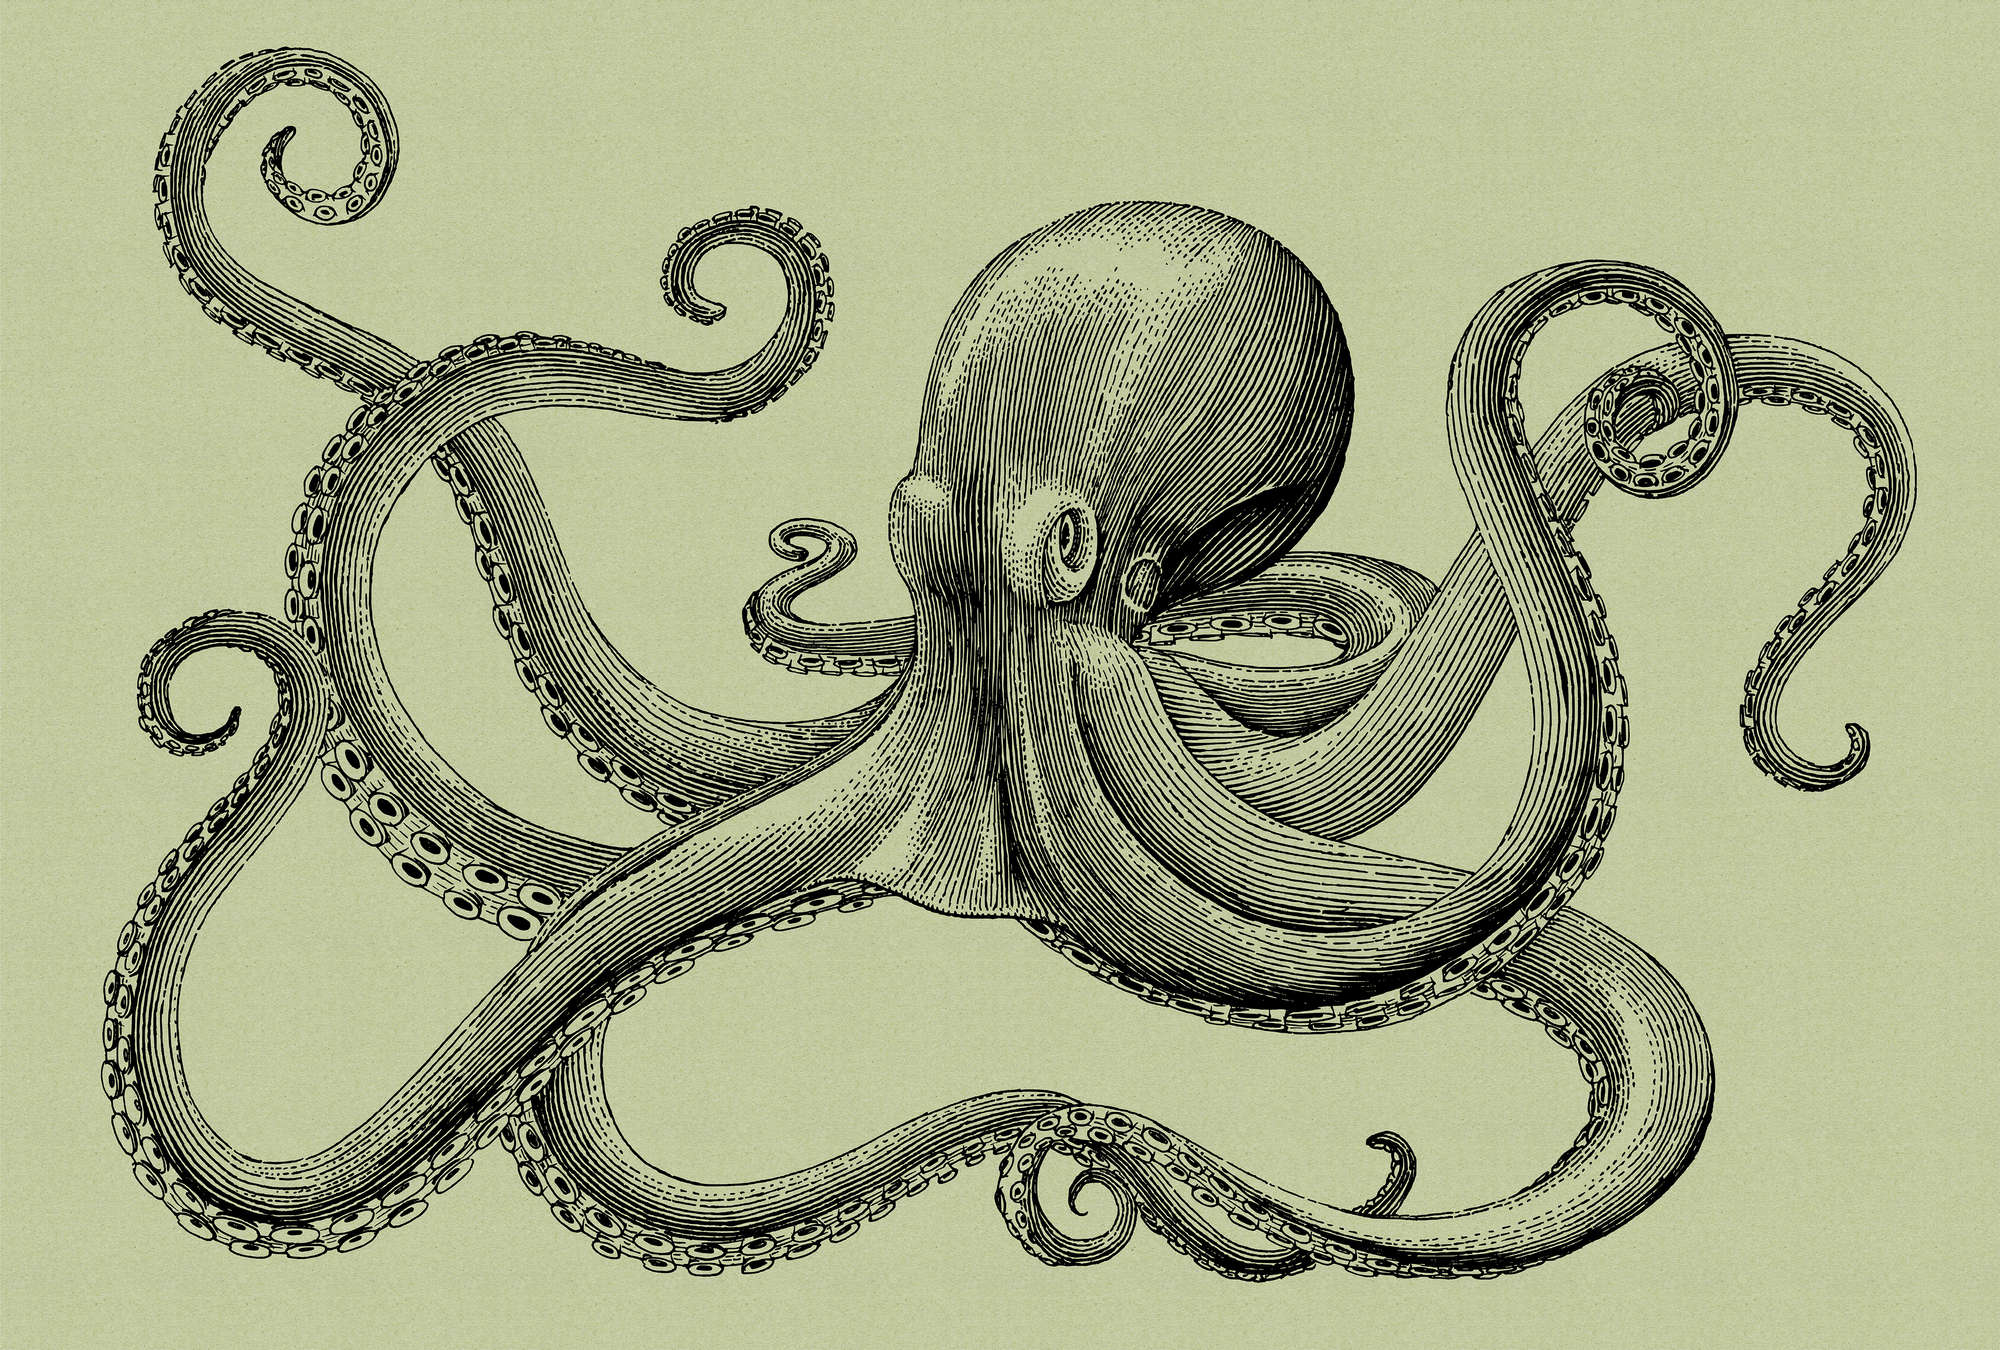             Jules 3 - Octopus Wallpaper Sketch Style & Vintage Look- Cardboard Texture - Green, Black | Matt Smooth Non-woven
        